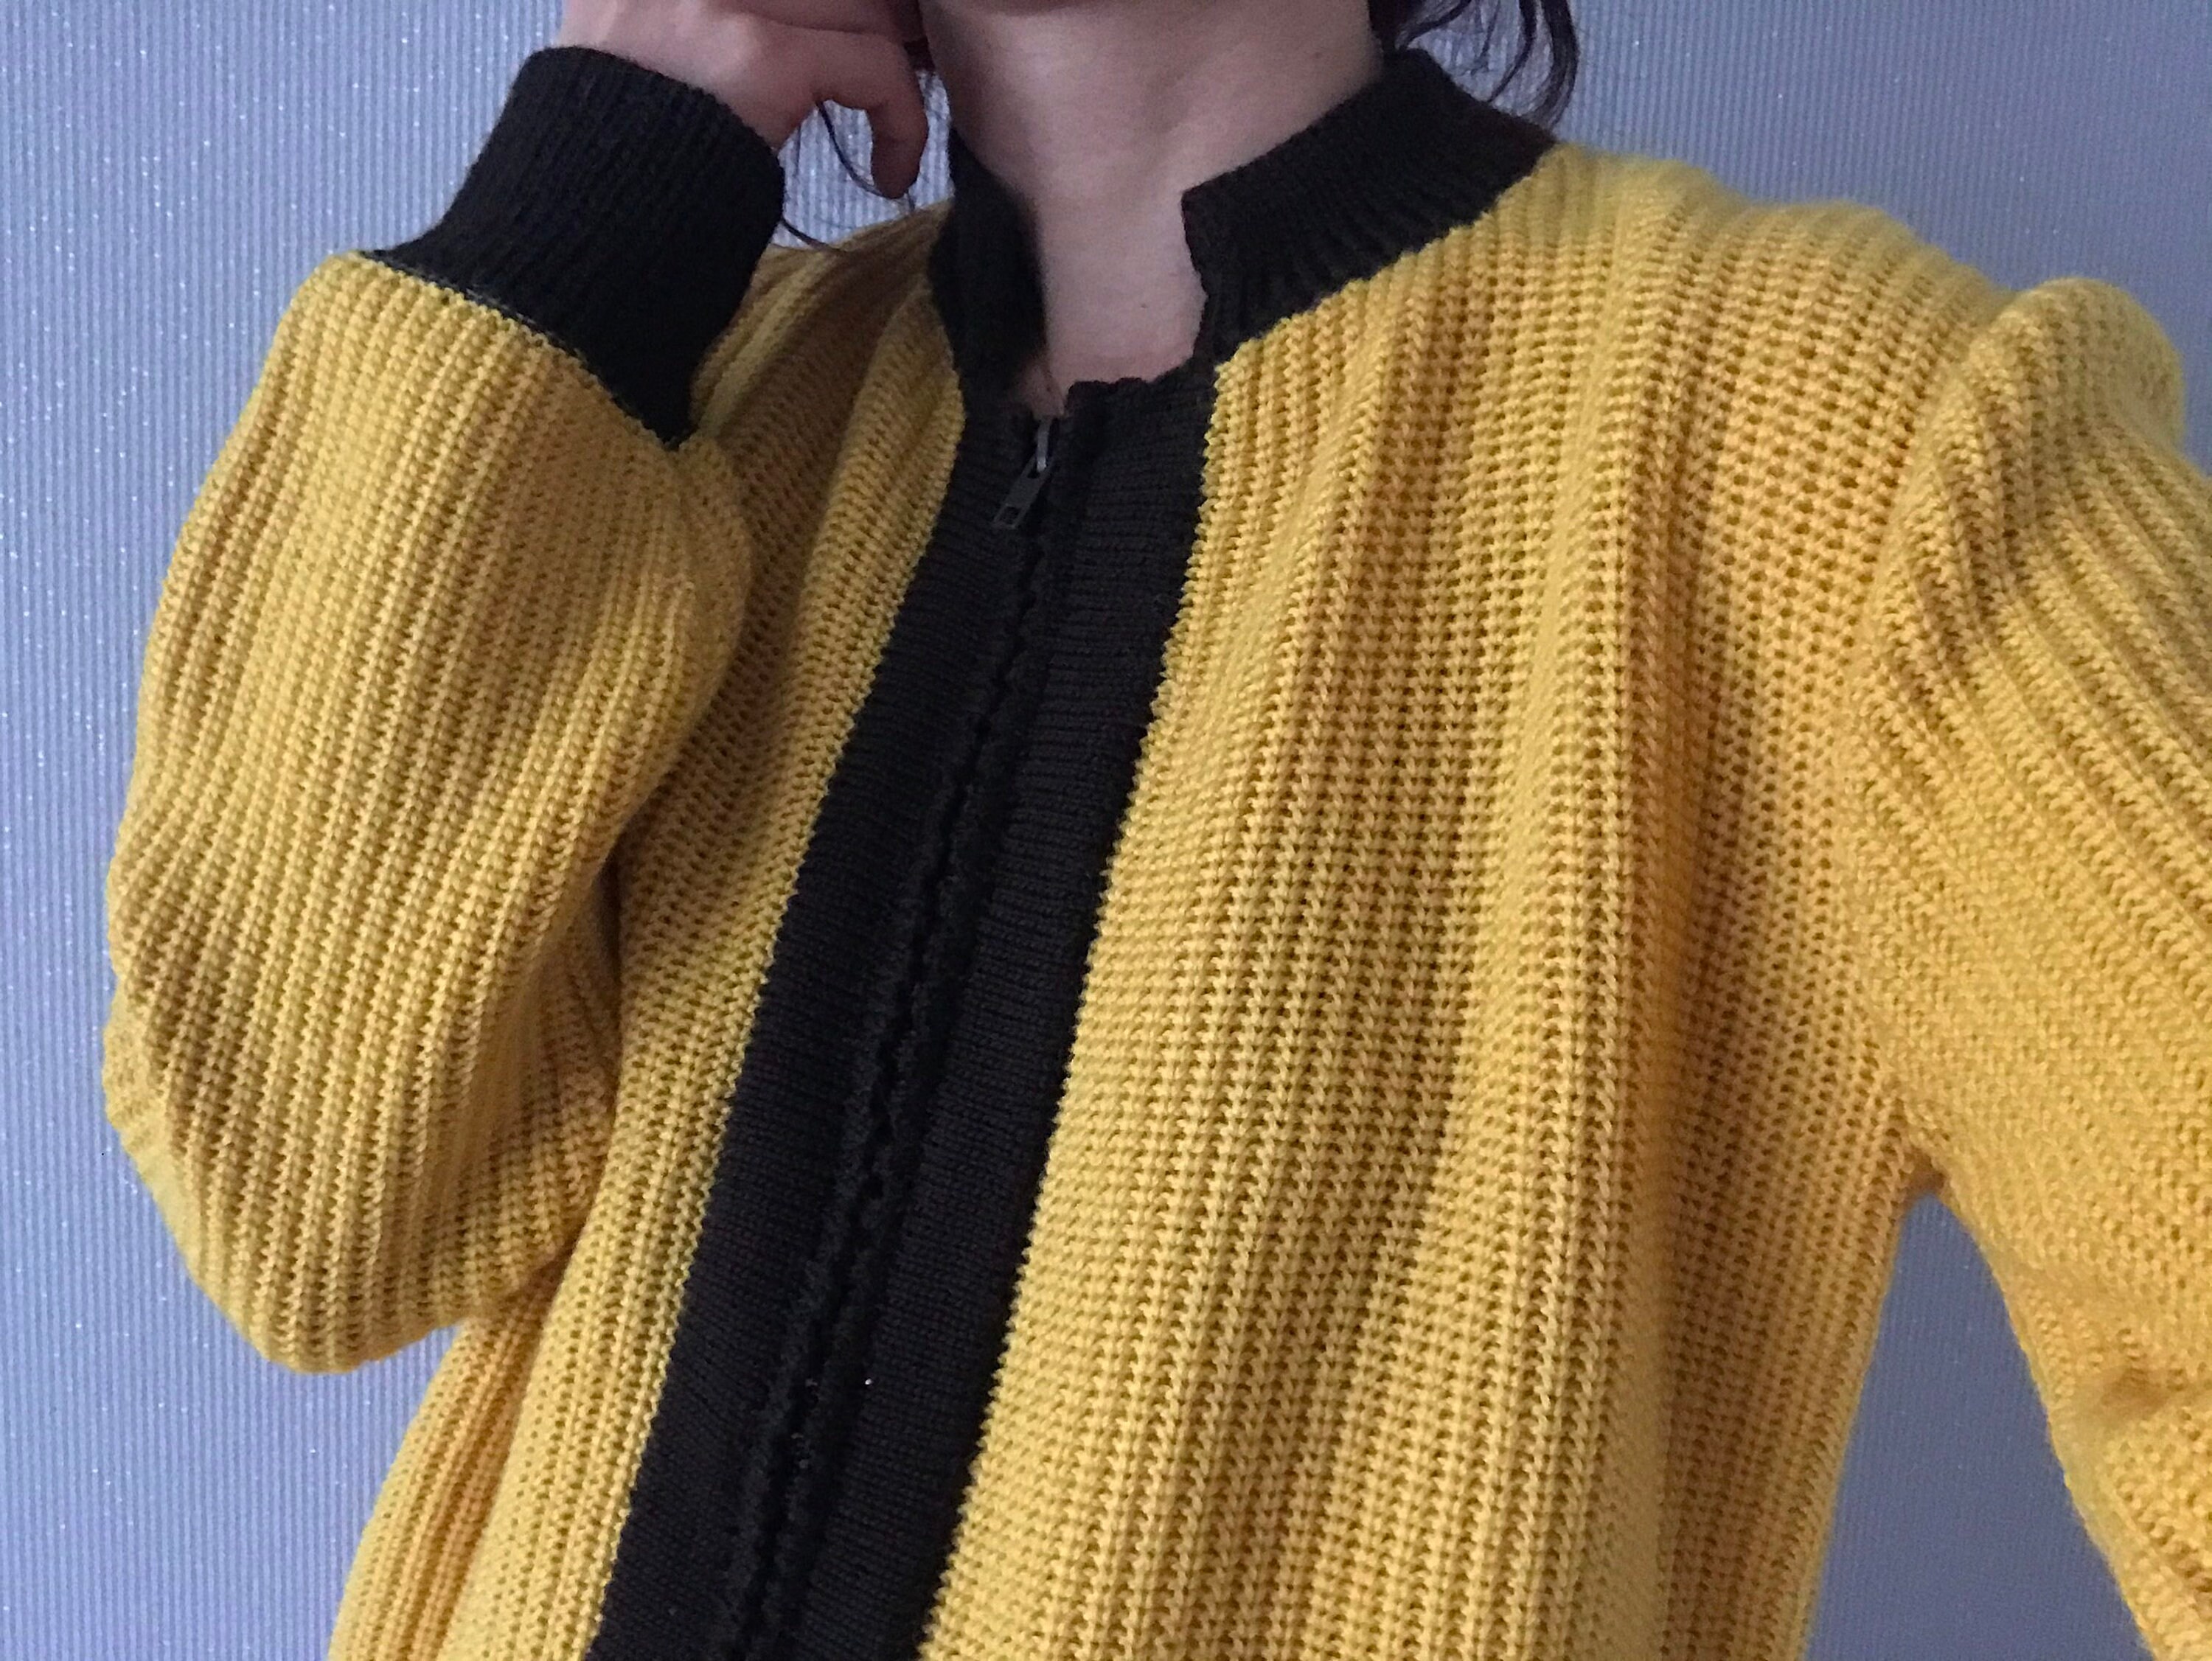 Vintage Intense Yellow Brown Wool Blend Knit Long Sleeve Zipper Cardigan/ Sweater/ Top/ Sweatshirt/ Jumper/ S - Petite L